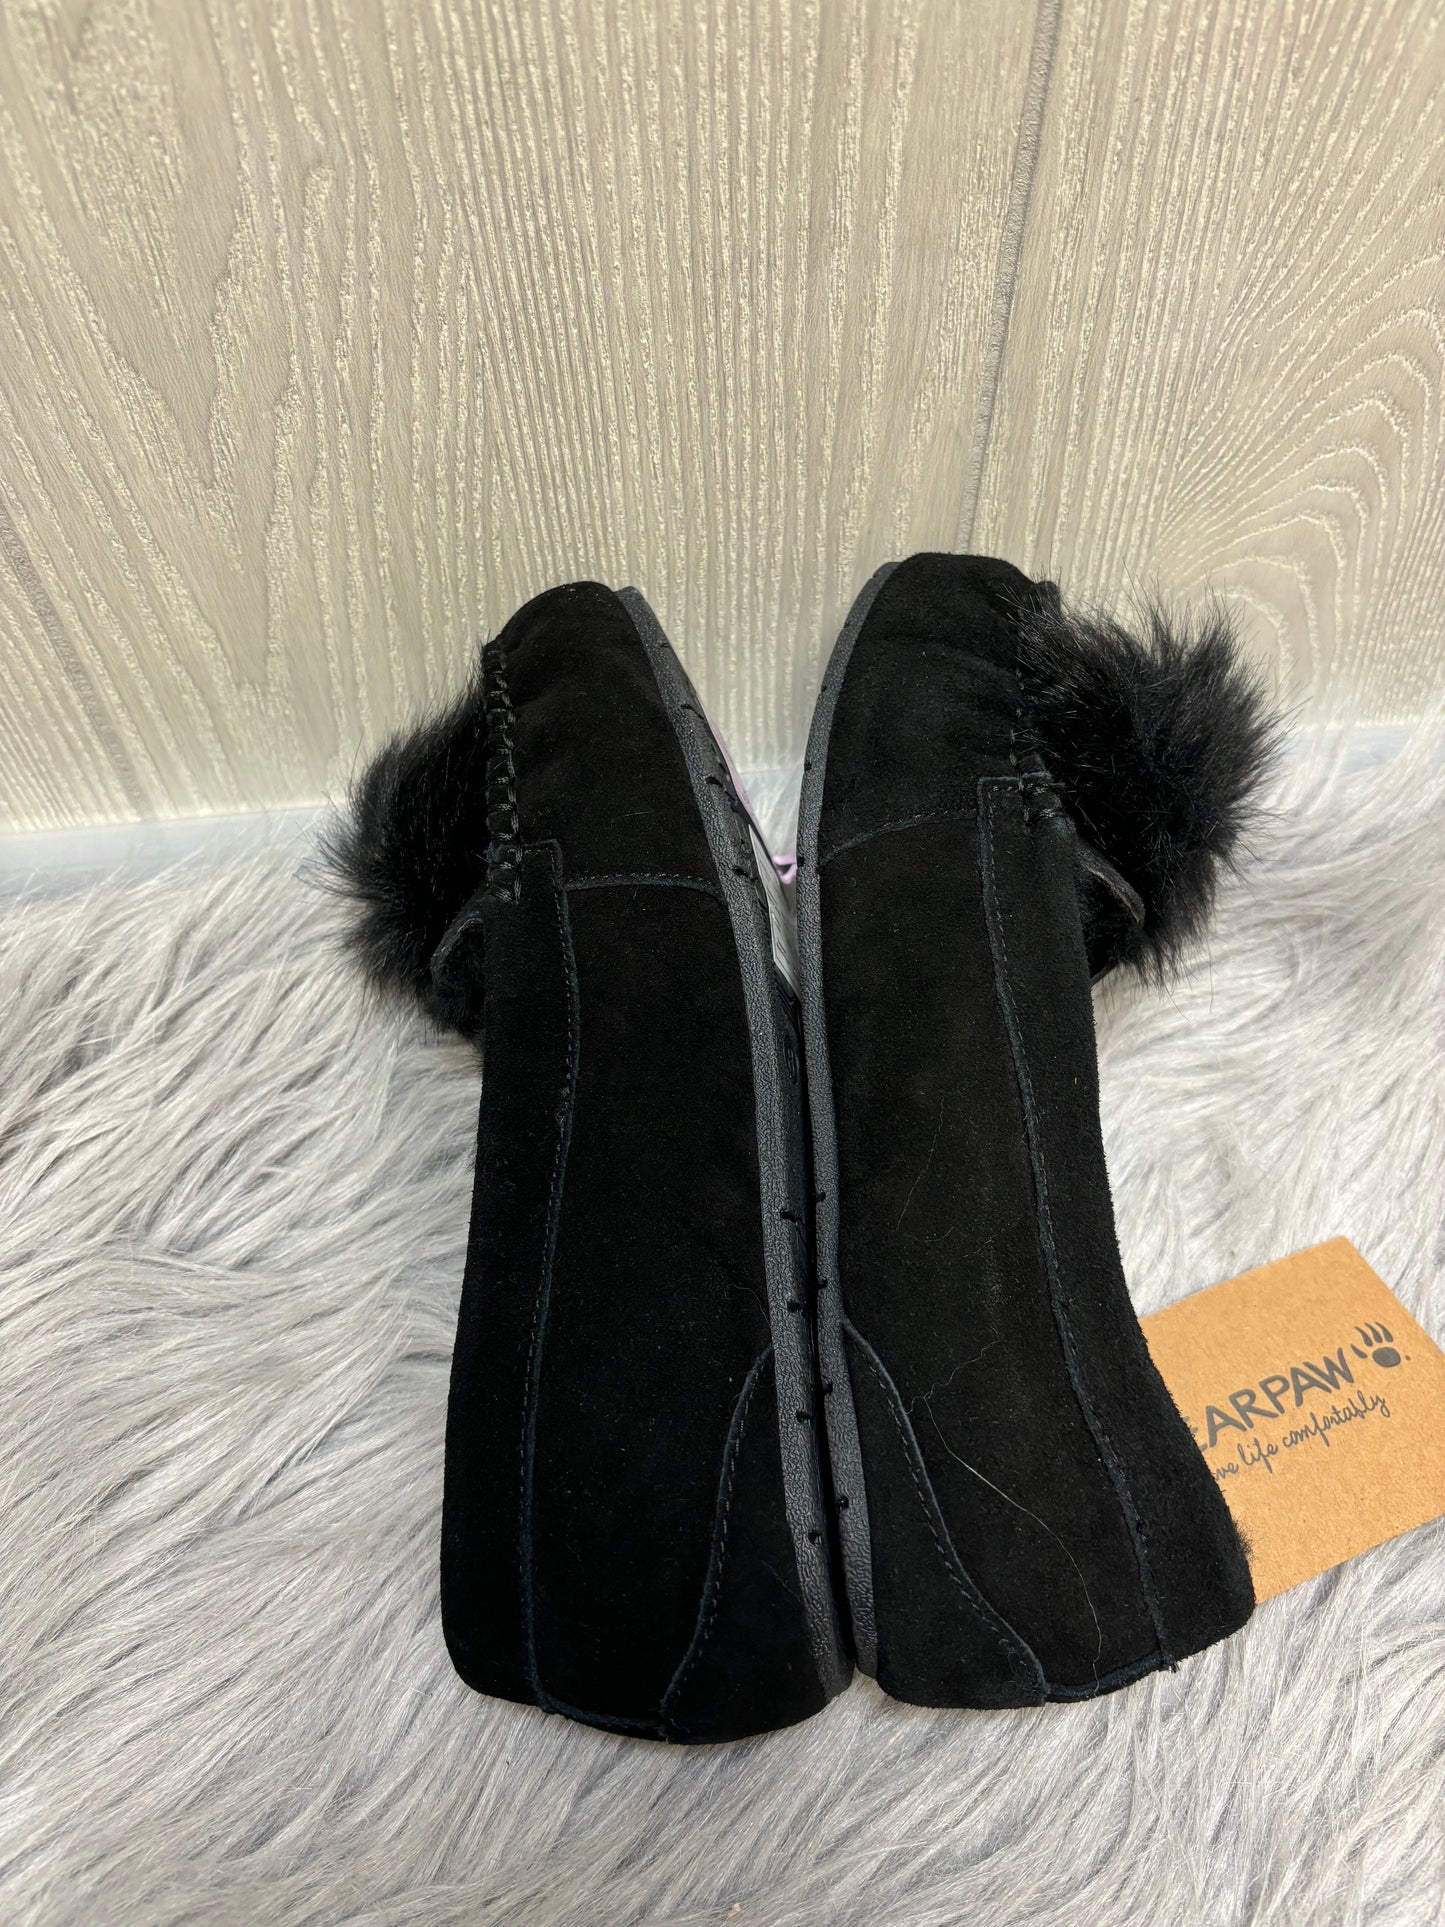 Black Shoes Flats Bearpaw, Size 8